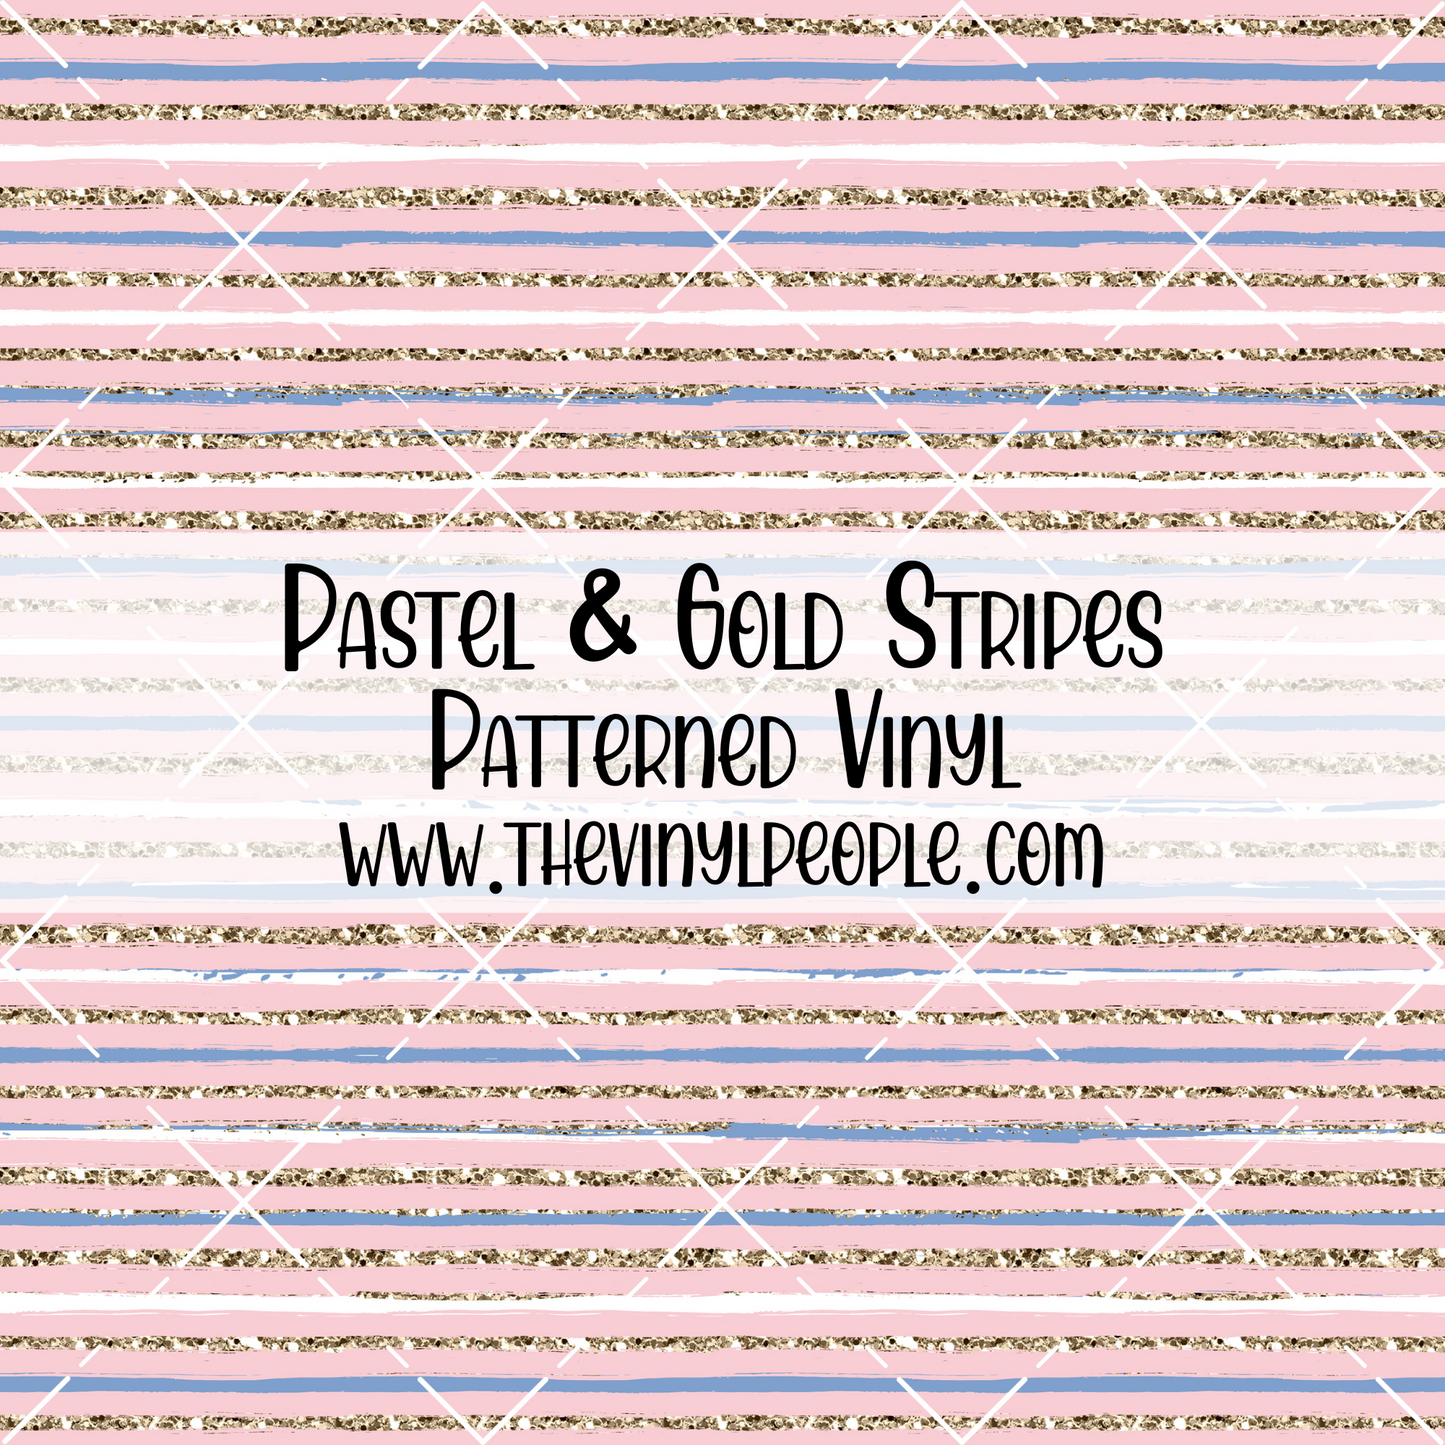 Pastel & Gold Stripes Patterned Vinyl